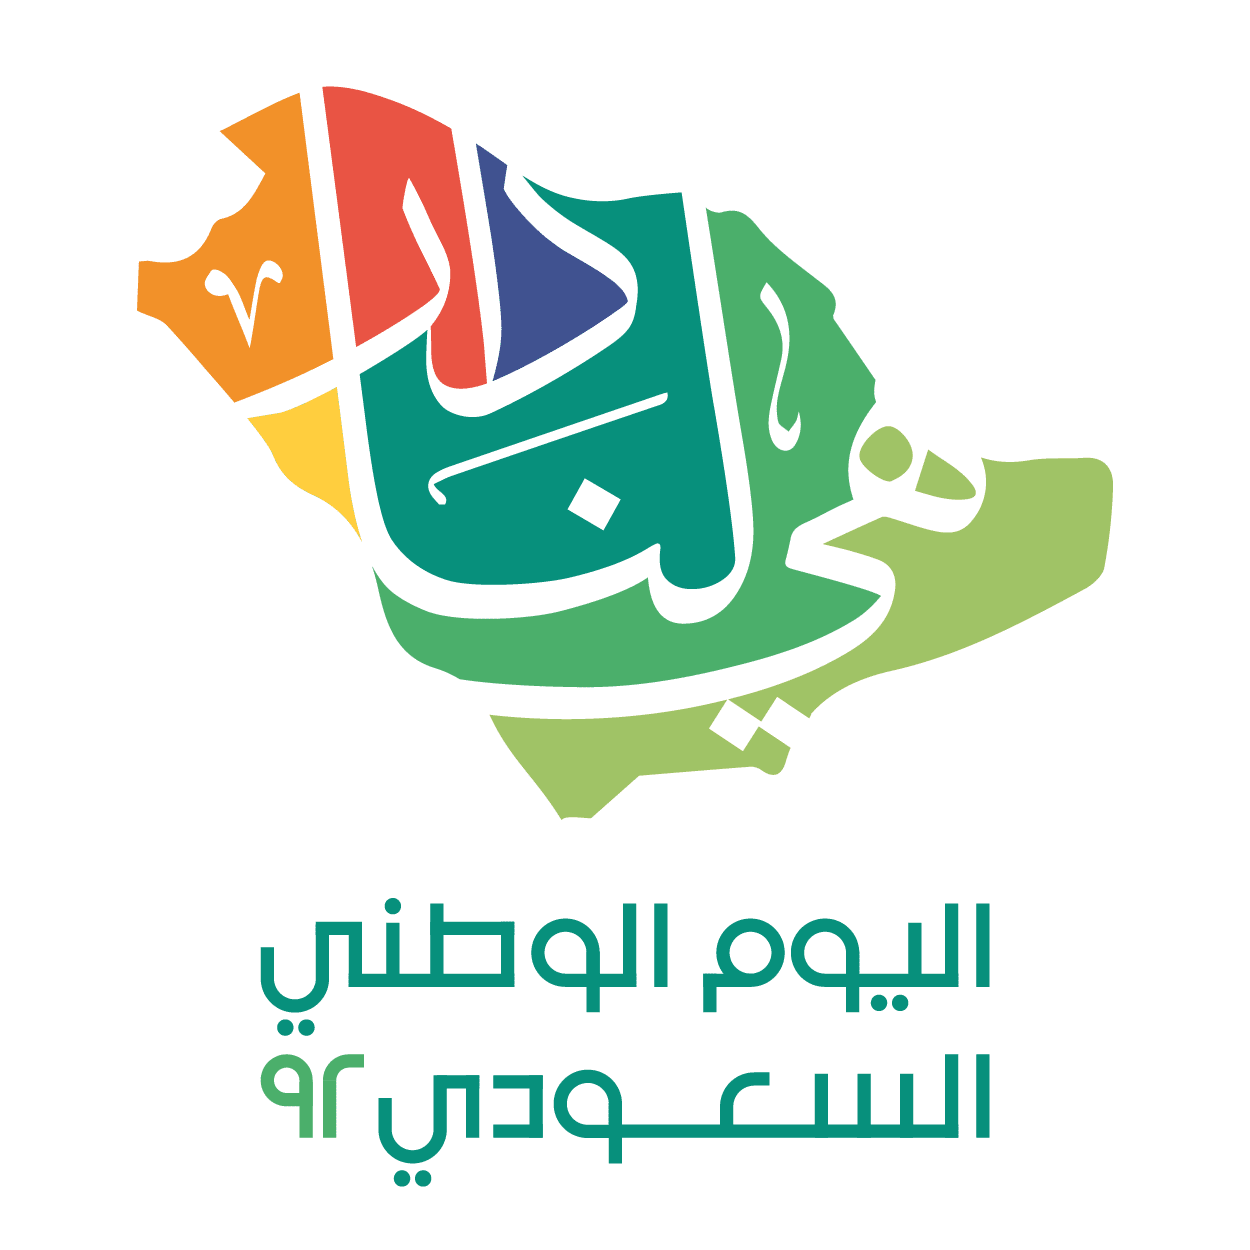 Turki Al-Sheikh Launches the 92nd Saudi National Day Identity